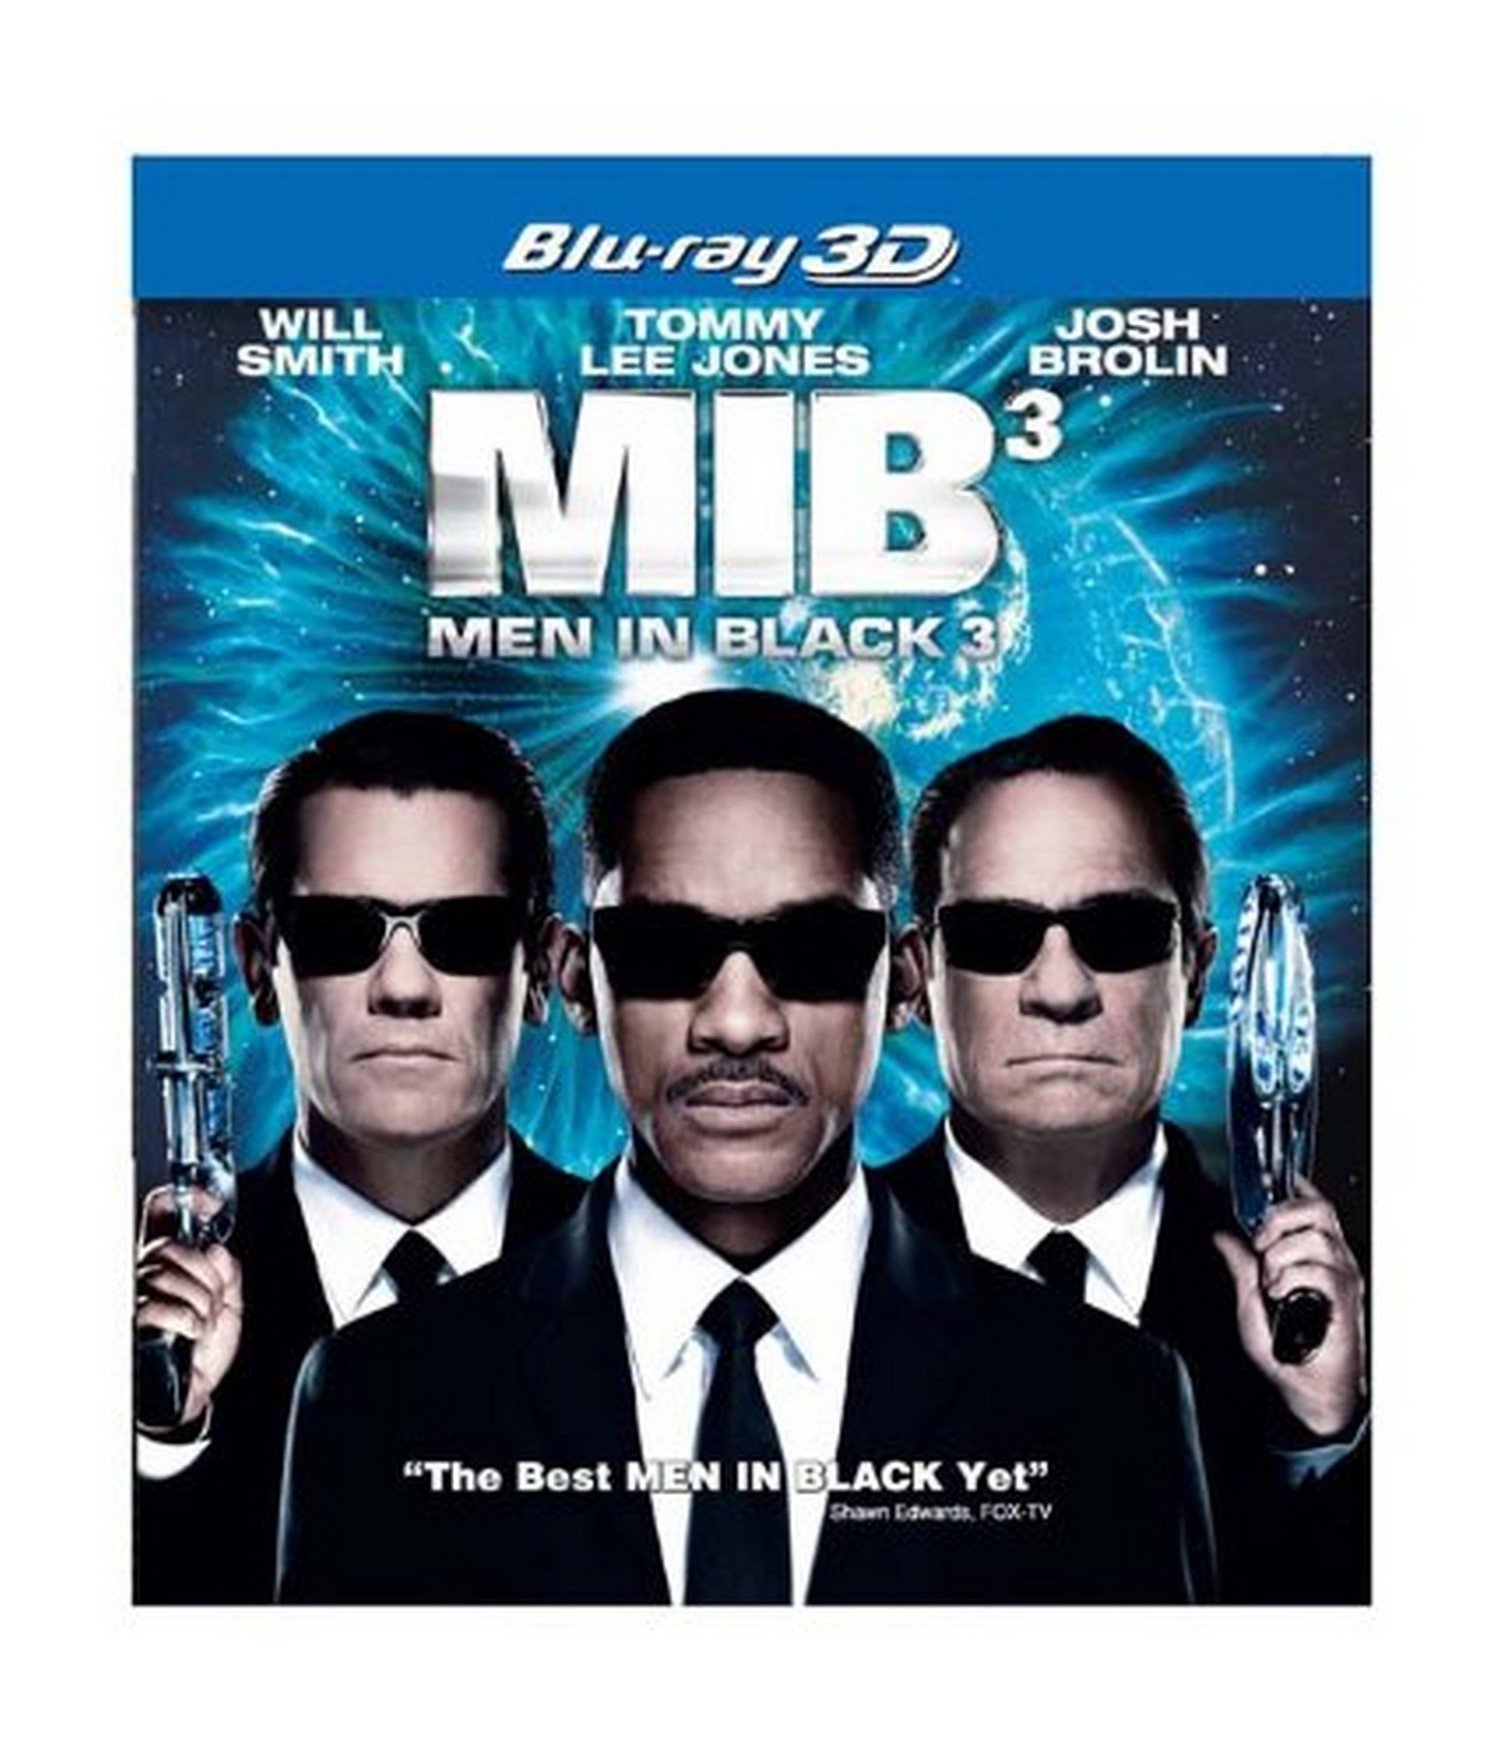 men-in-black-3-3d-movie-purchase-or-watch-online